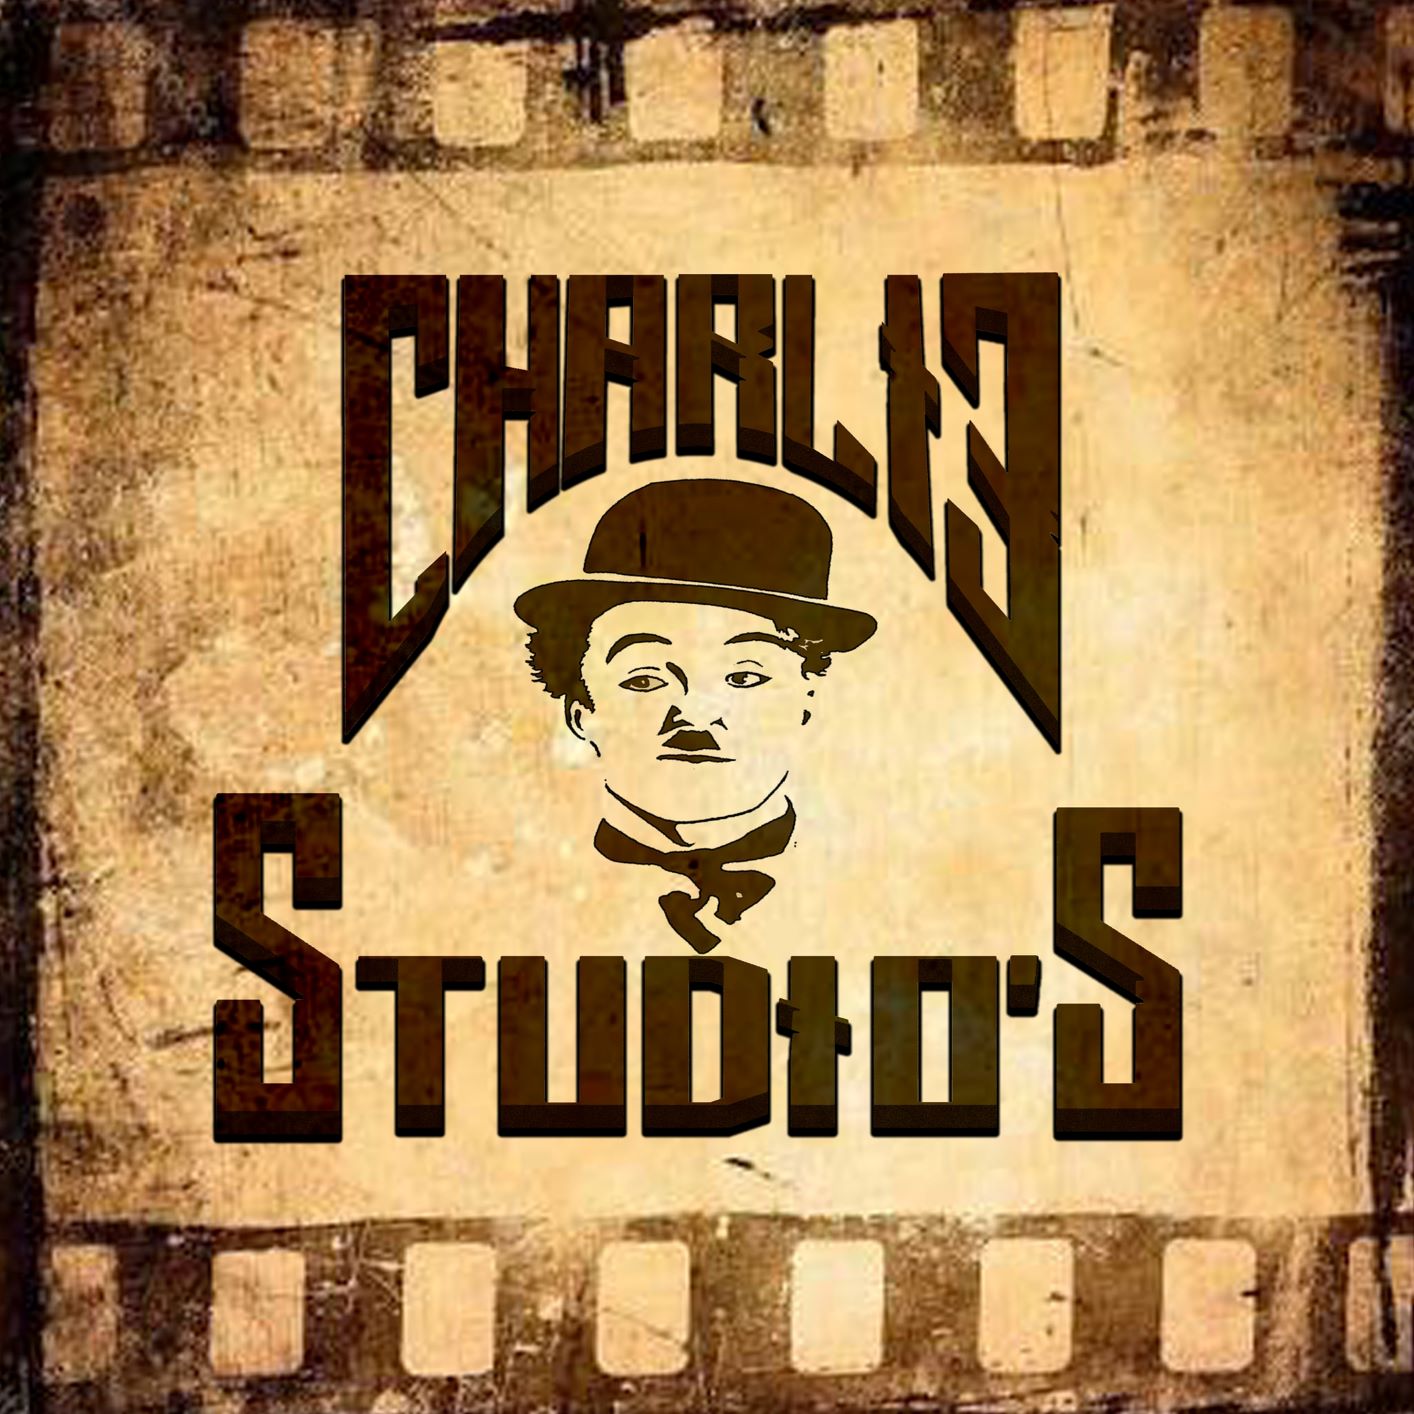 Charlie Studios